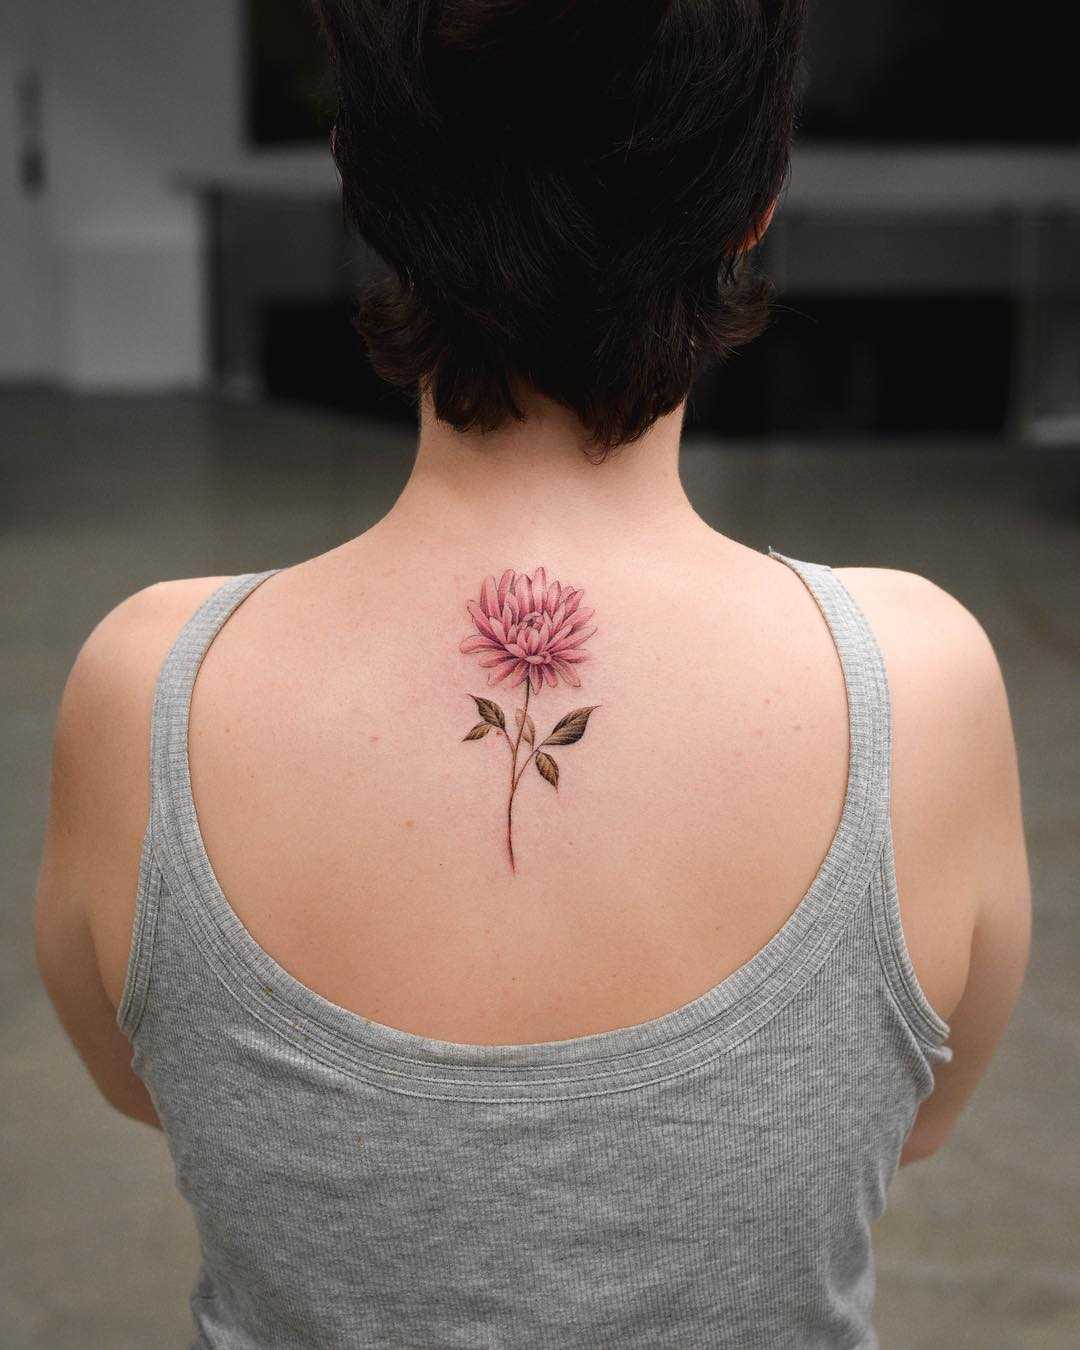 Chrysanthemum tattoo on the back